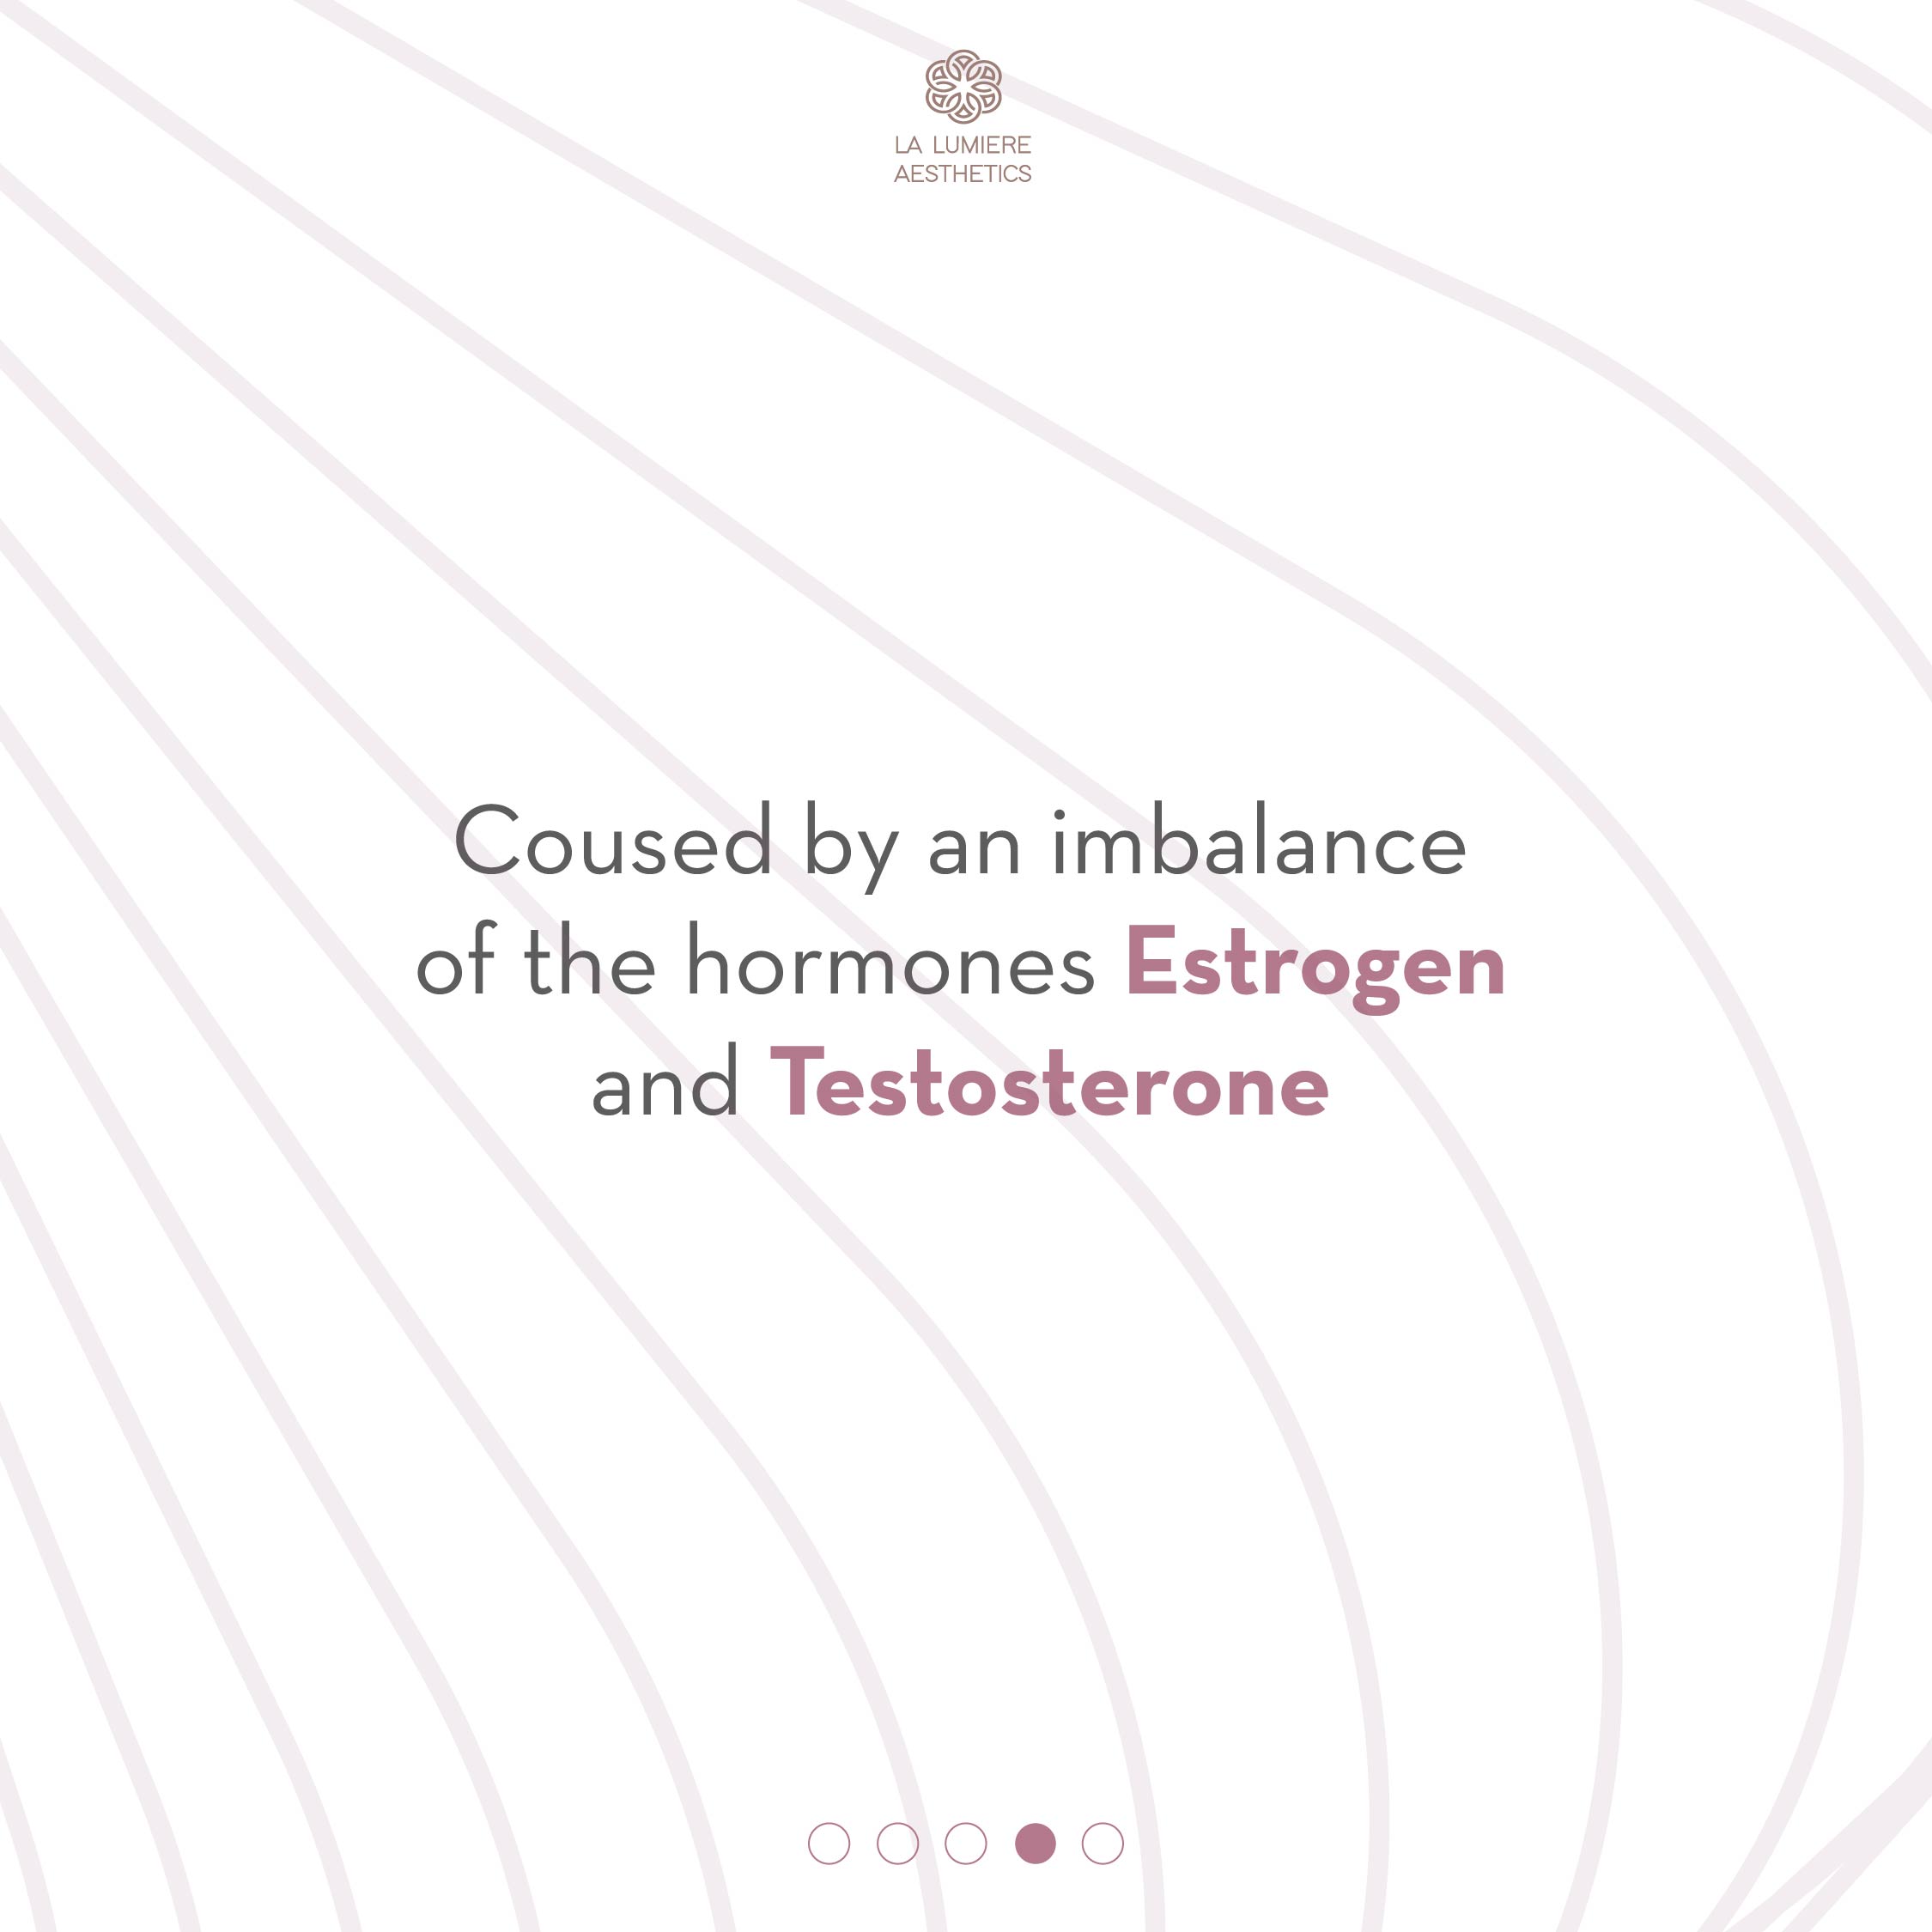 Esterogem and testosterone